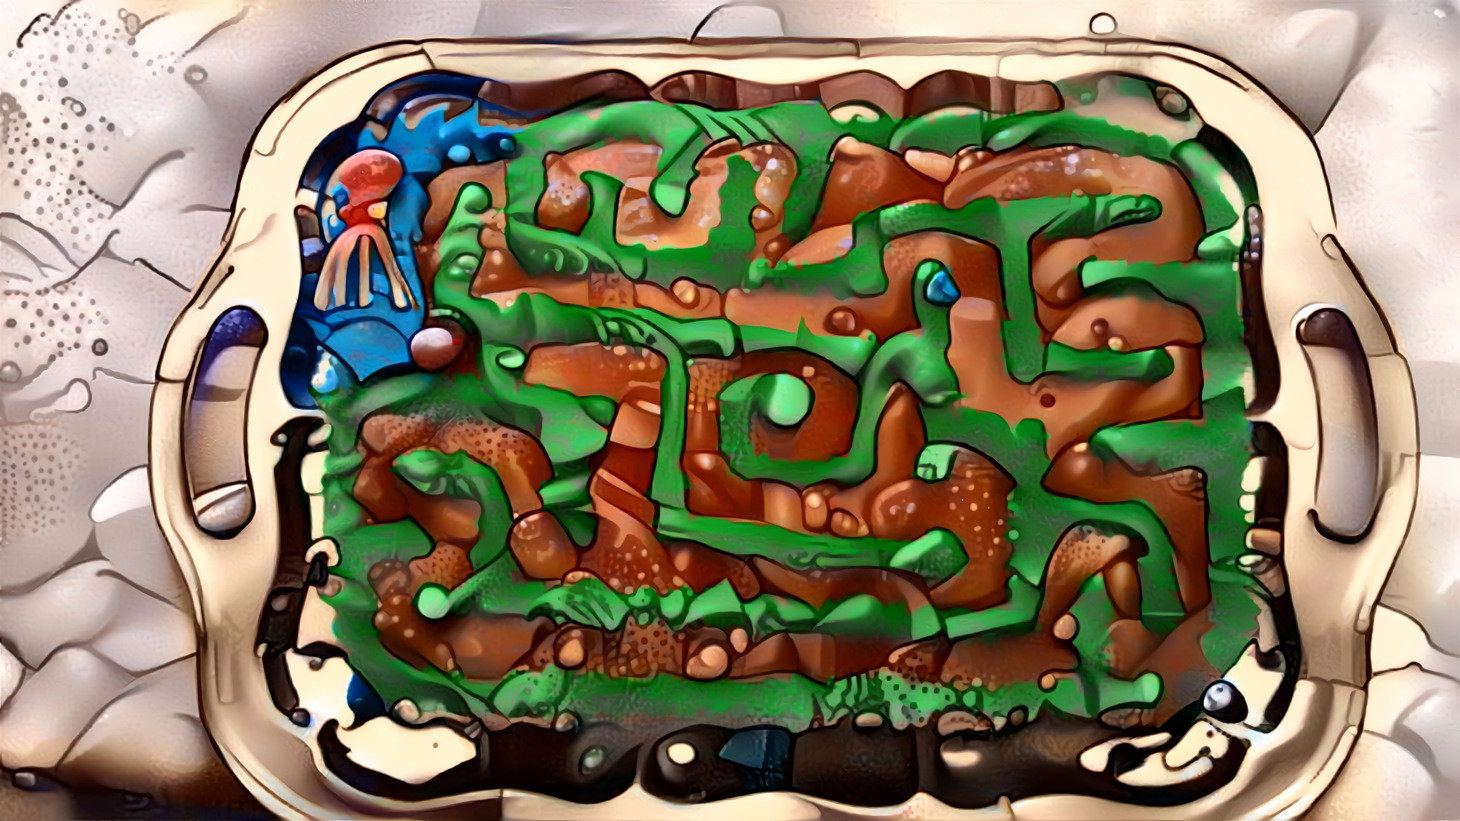 Hedge maze cake in Candyland